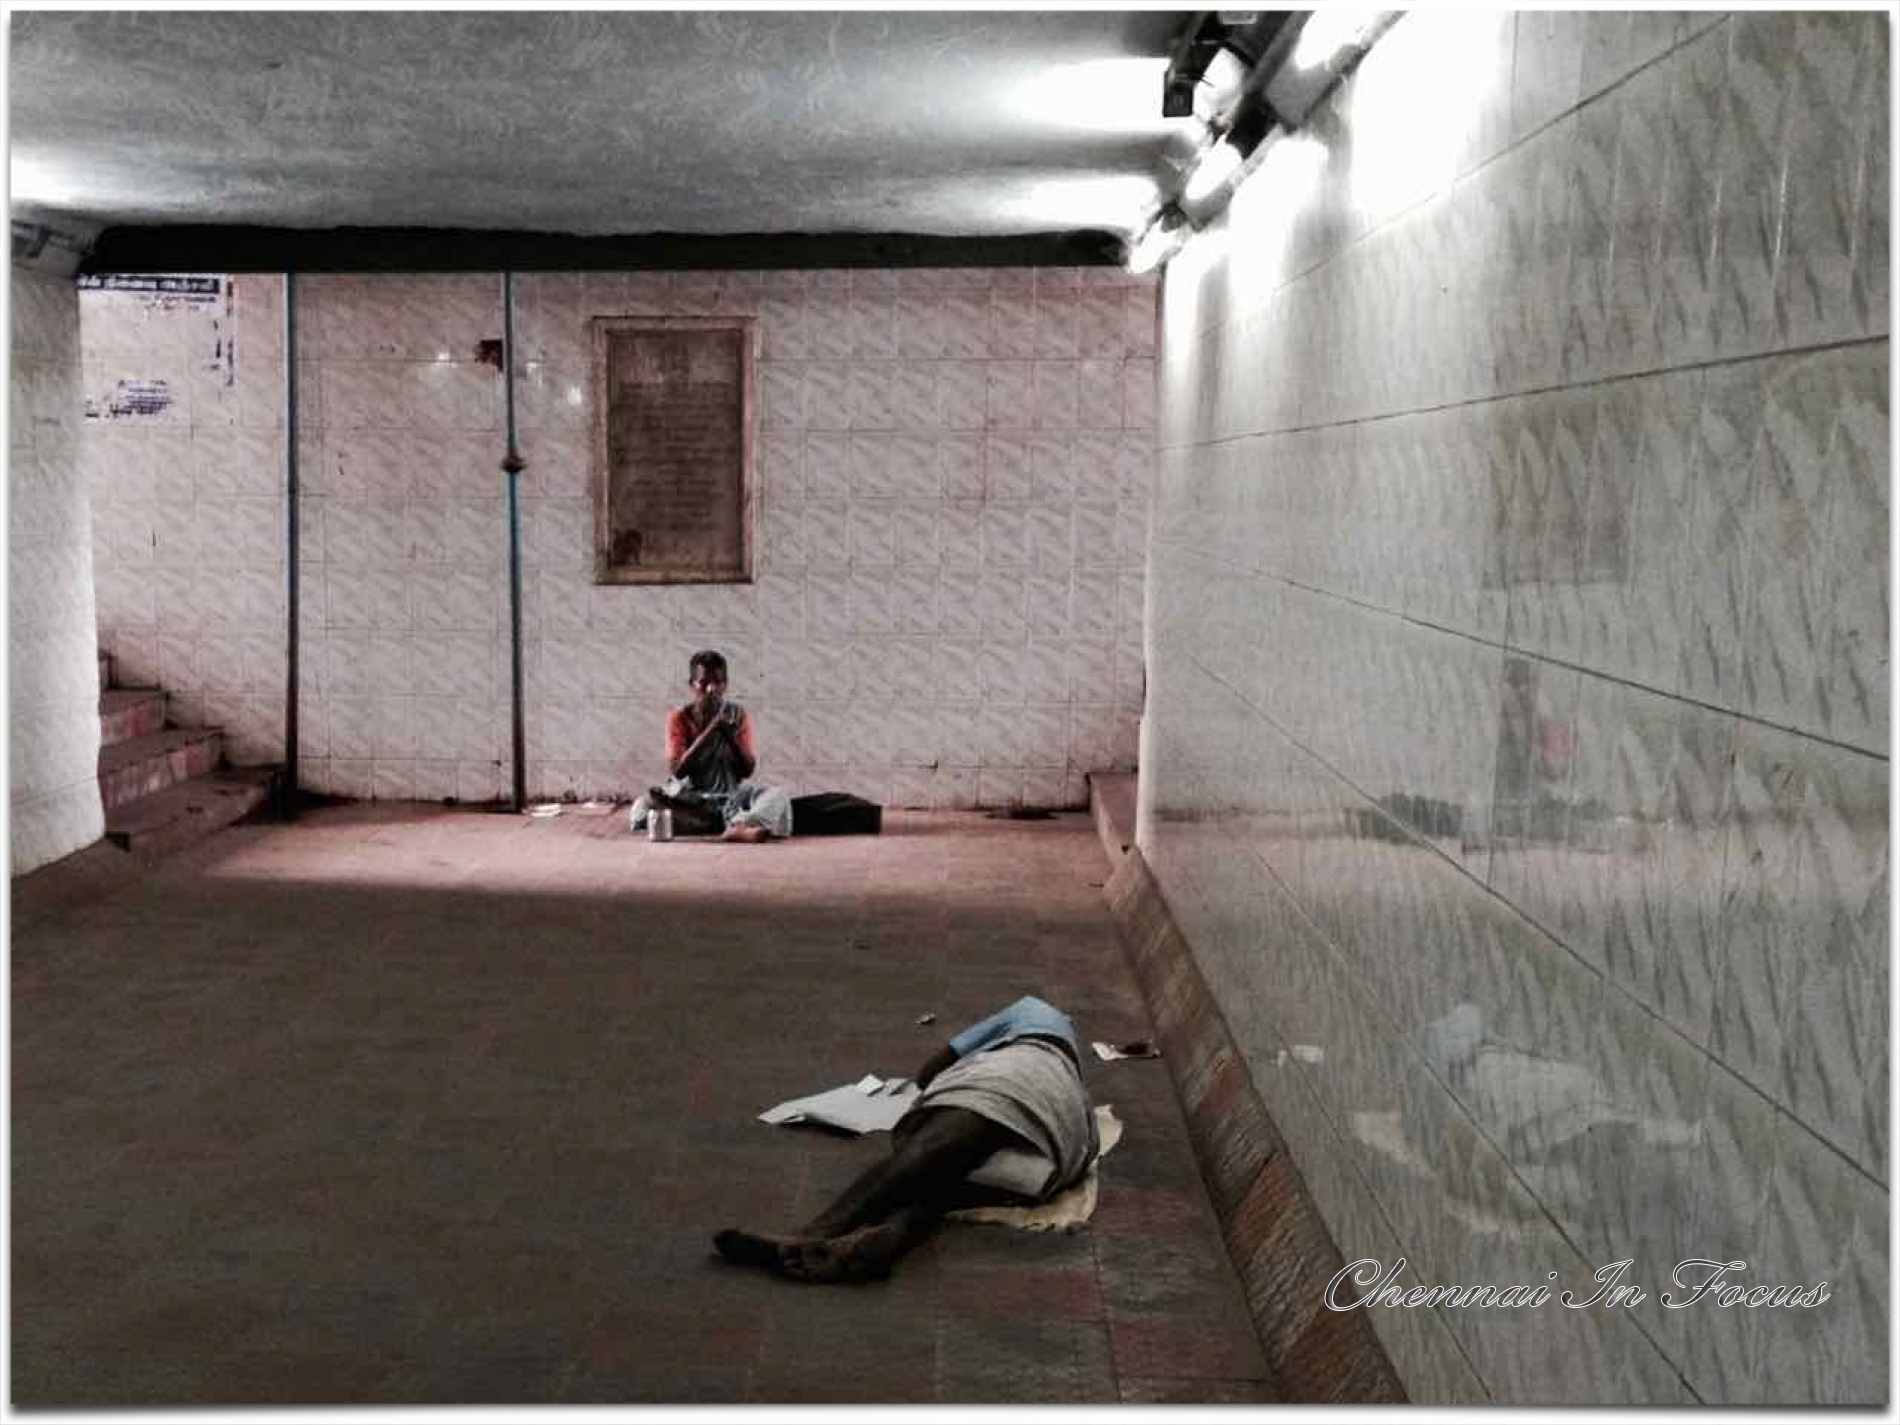 Homeless subway life.